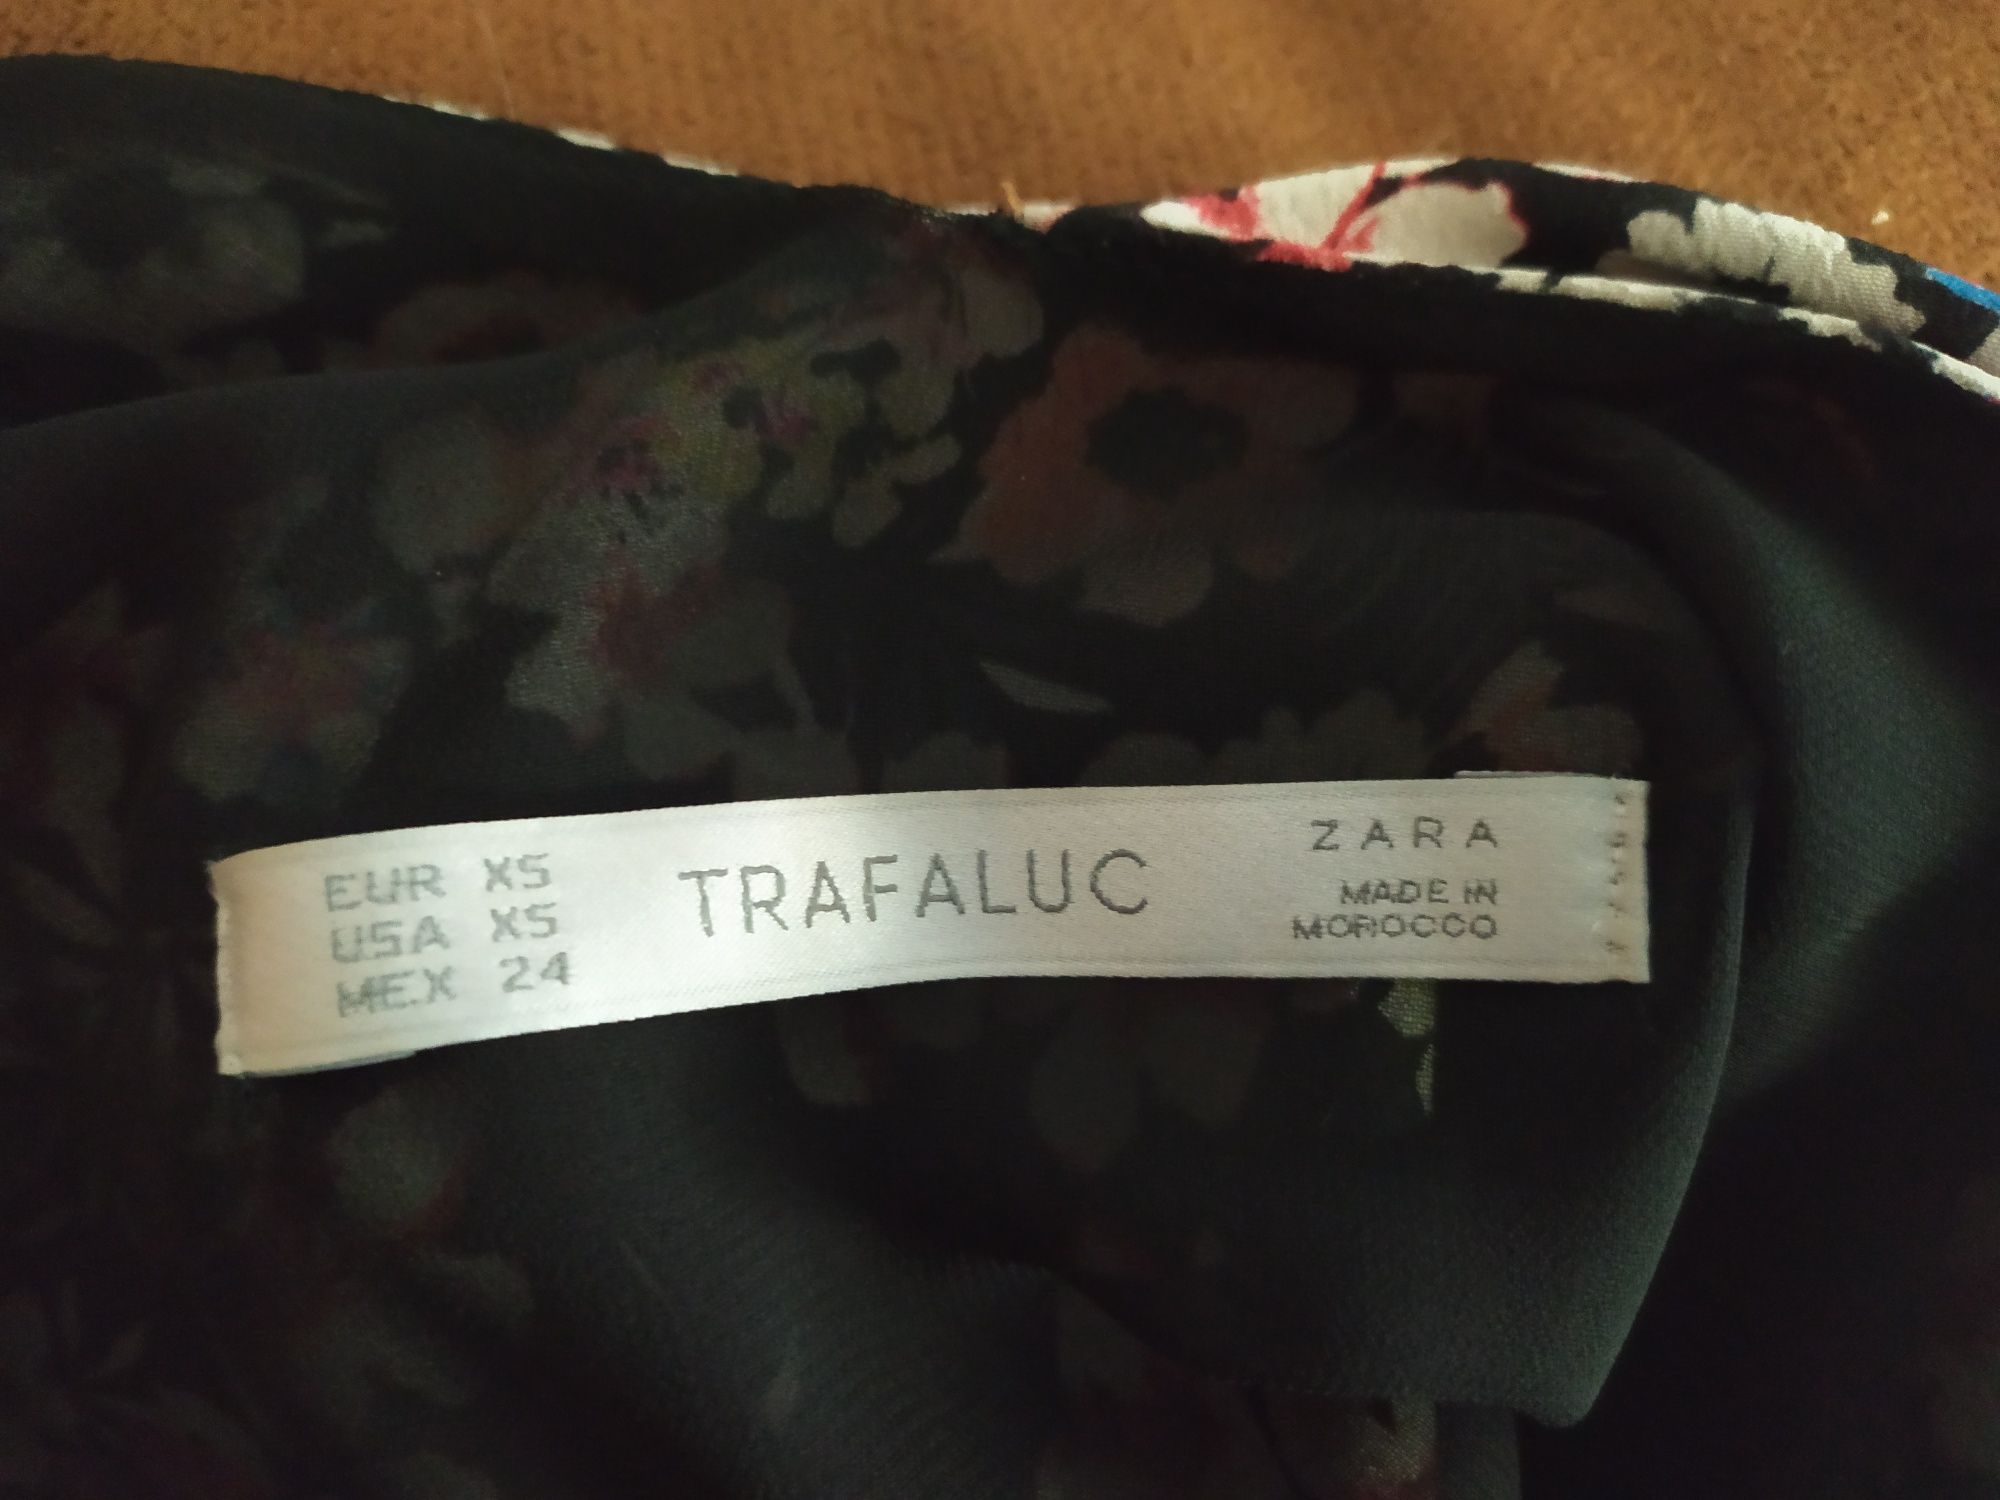 Zara vintage - Blusa floral - tamanho XS